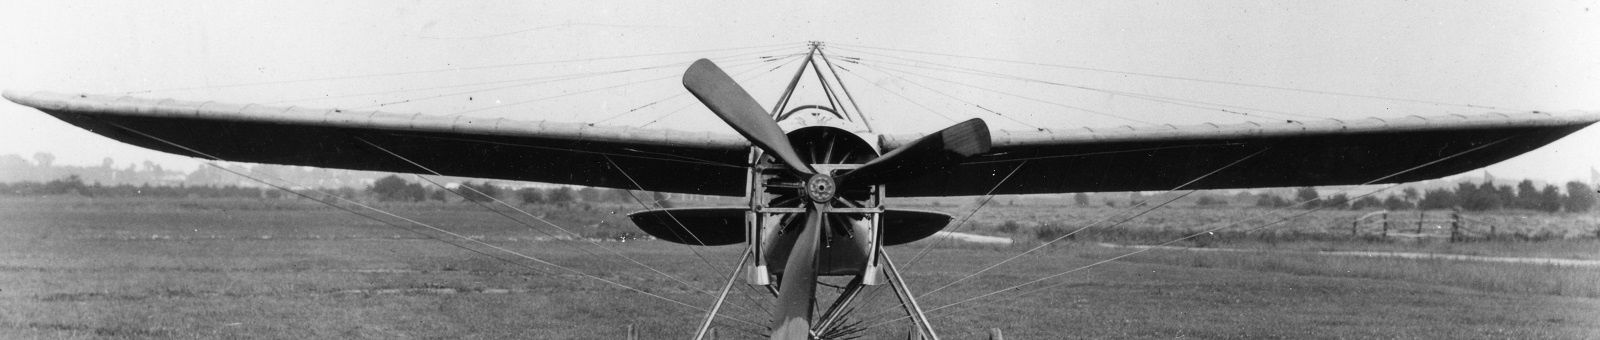 Vickers No 7 Monoplane